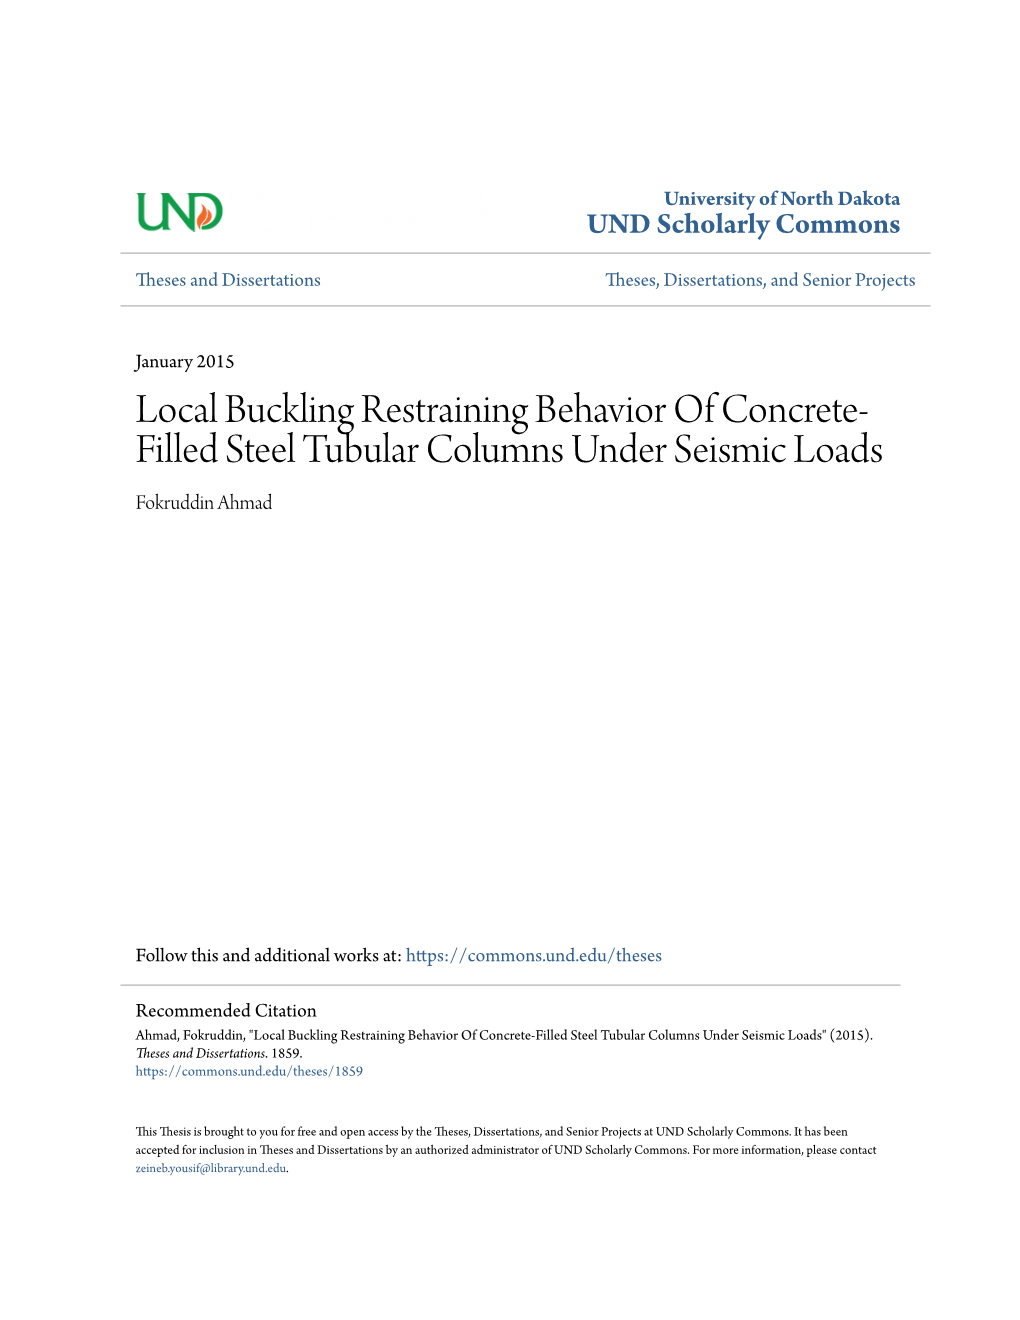 Local Buckling Restraining Behavior of Concrete-Filled Steel Tubular Columns Under Seismic Loads" (2015)